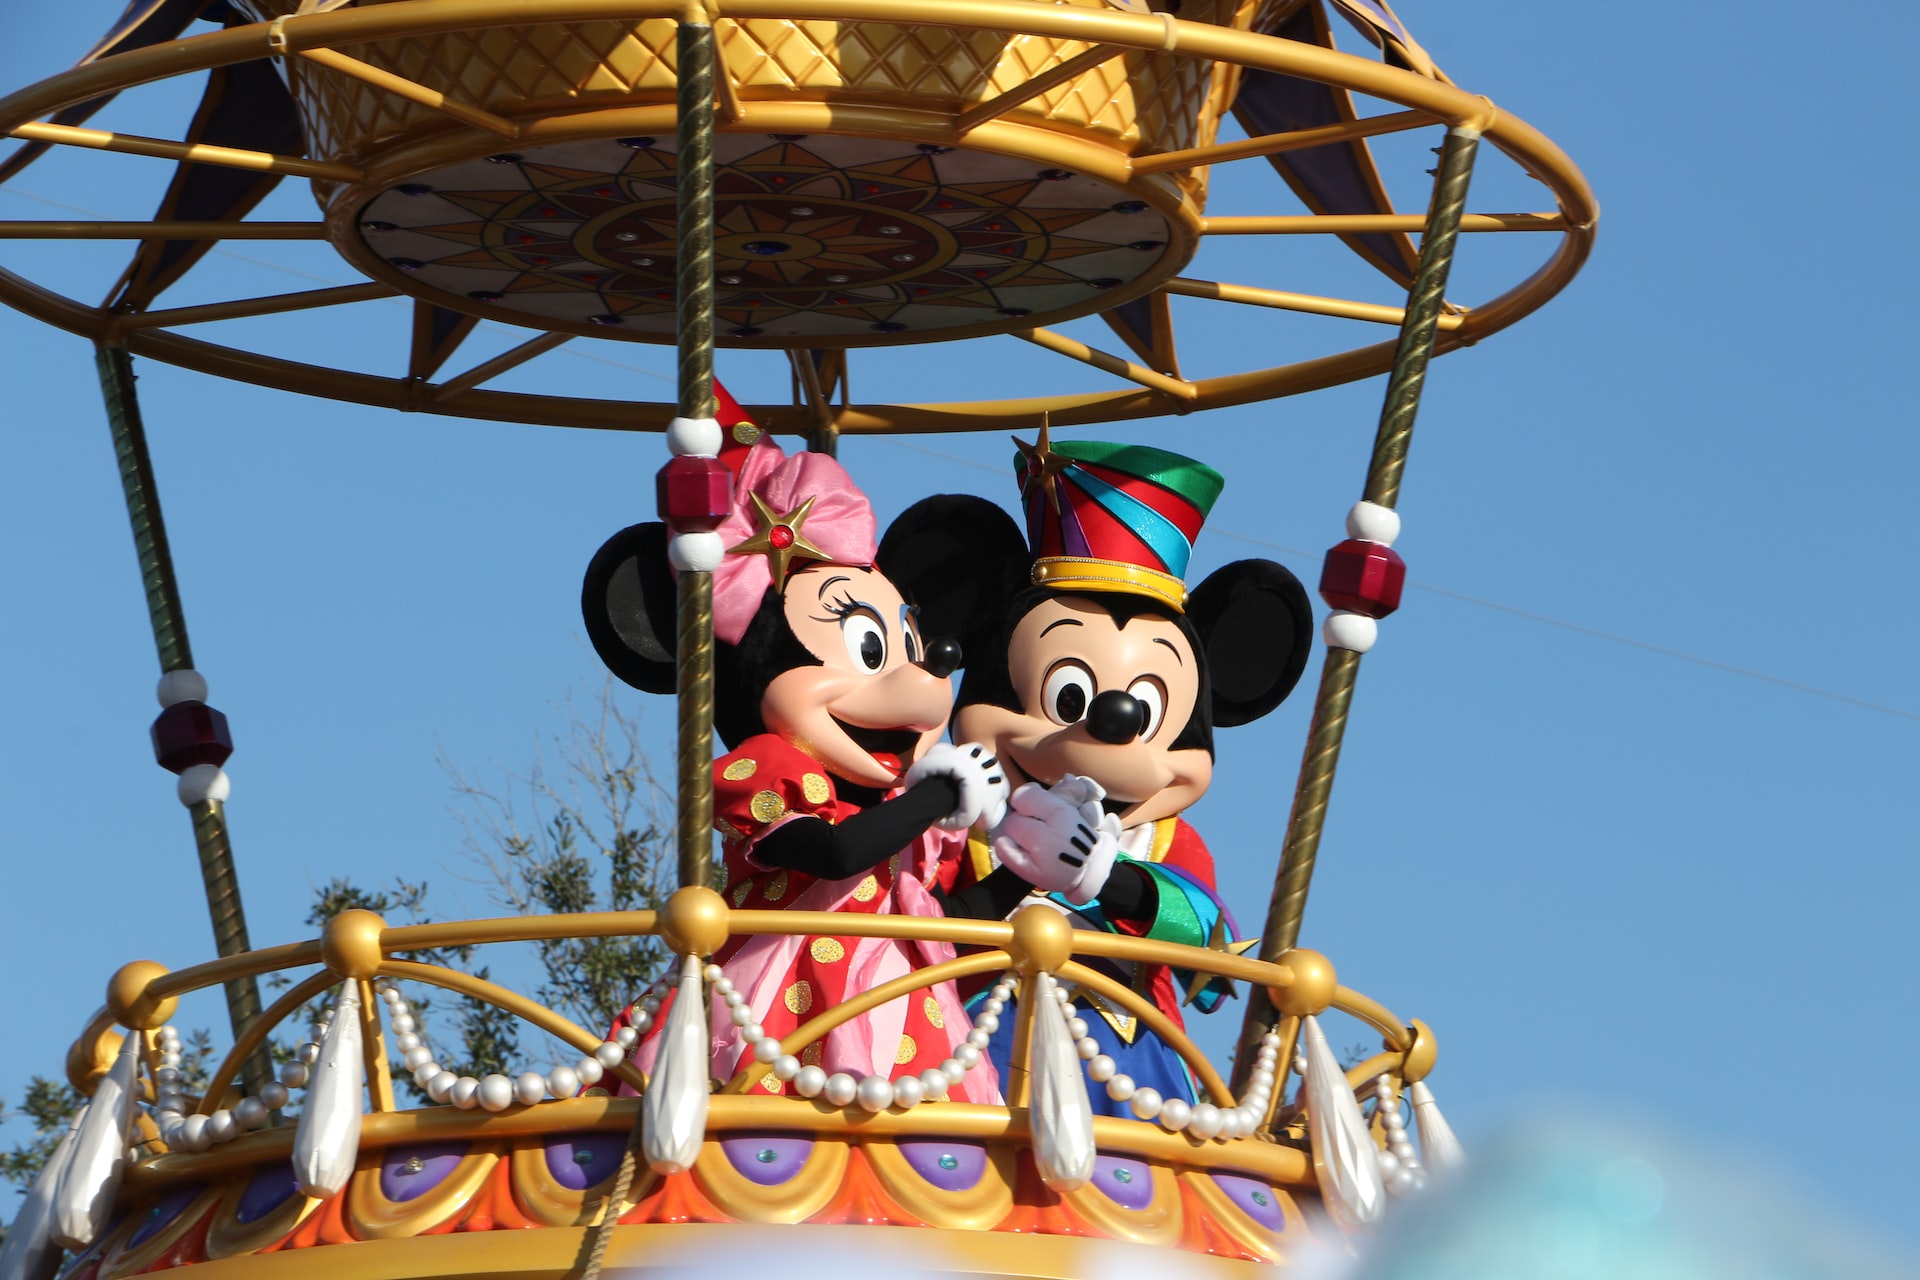 Mickey and Minnie Mouse at Magic Kingdom Park, Orlando, Florida.